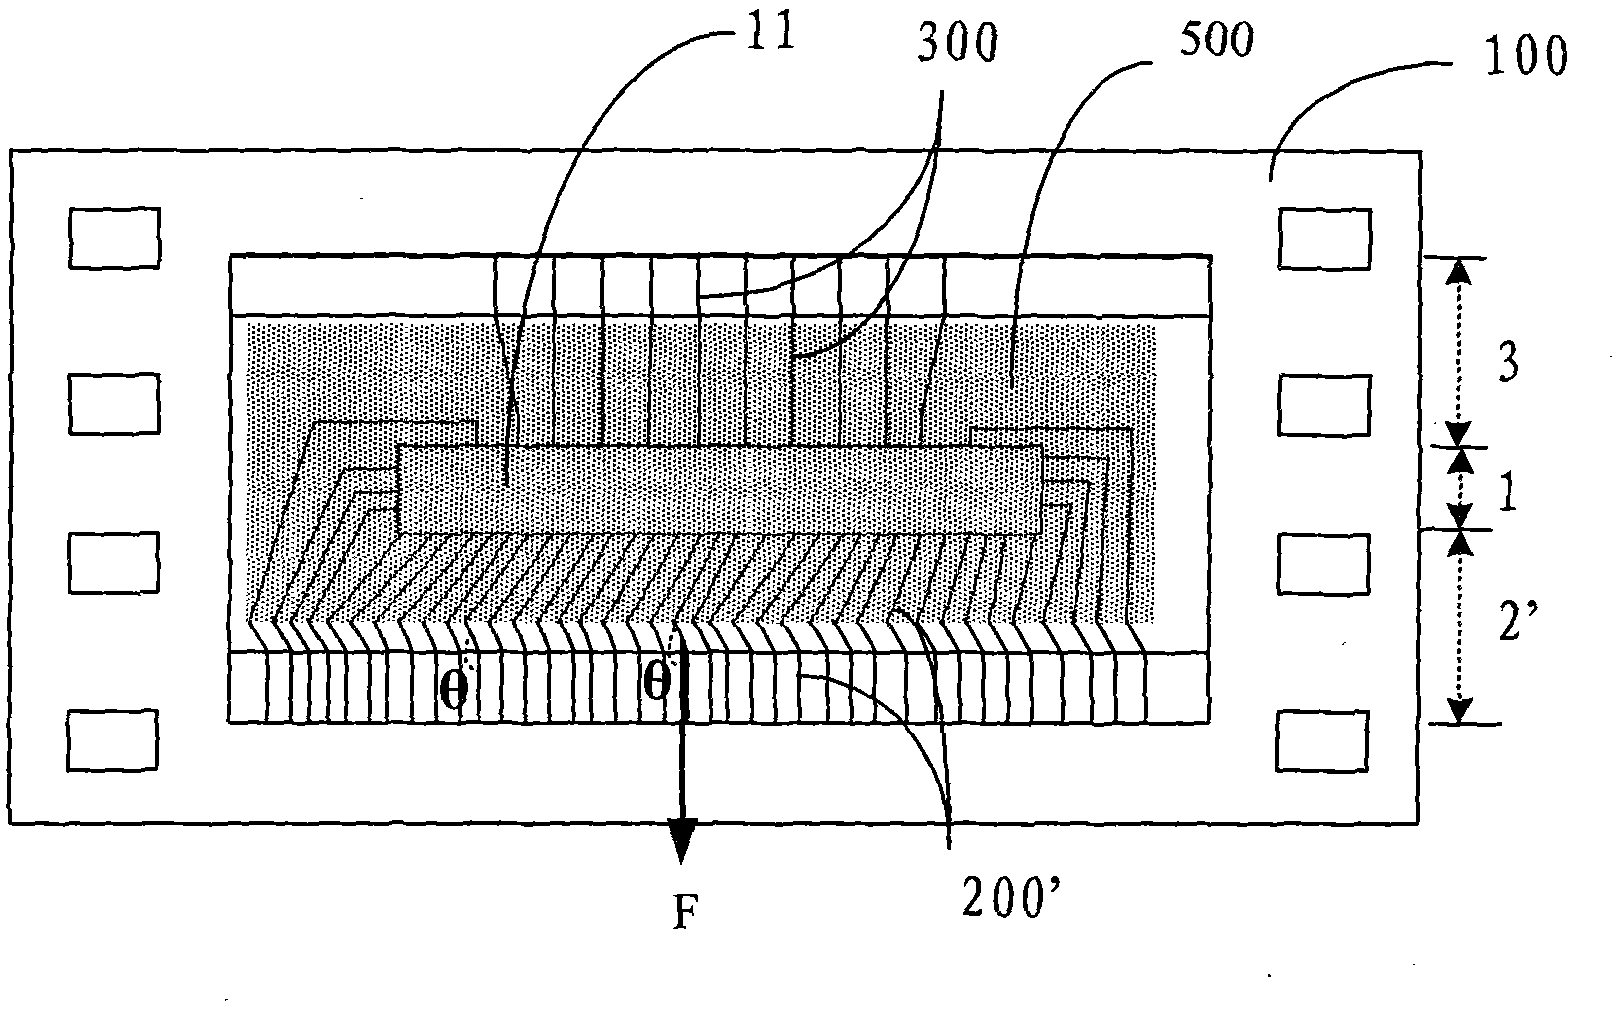 Flexible printed circuit board of flat panel display device